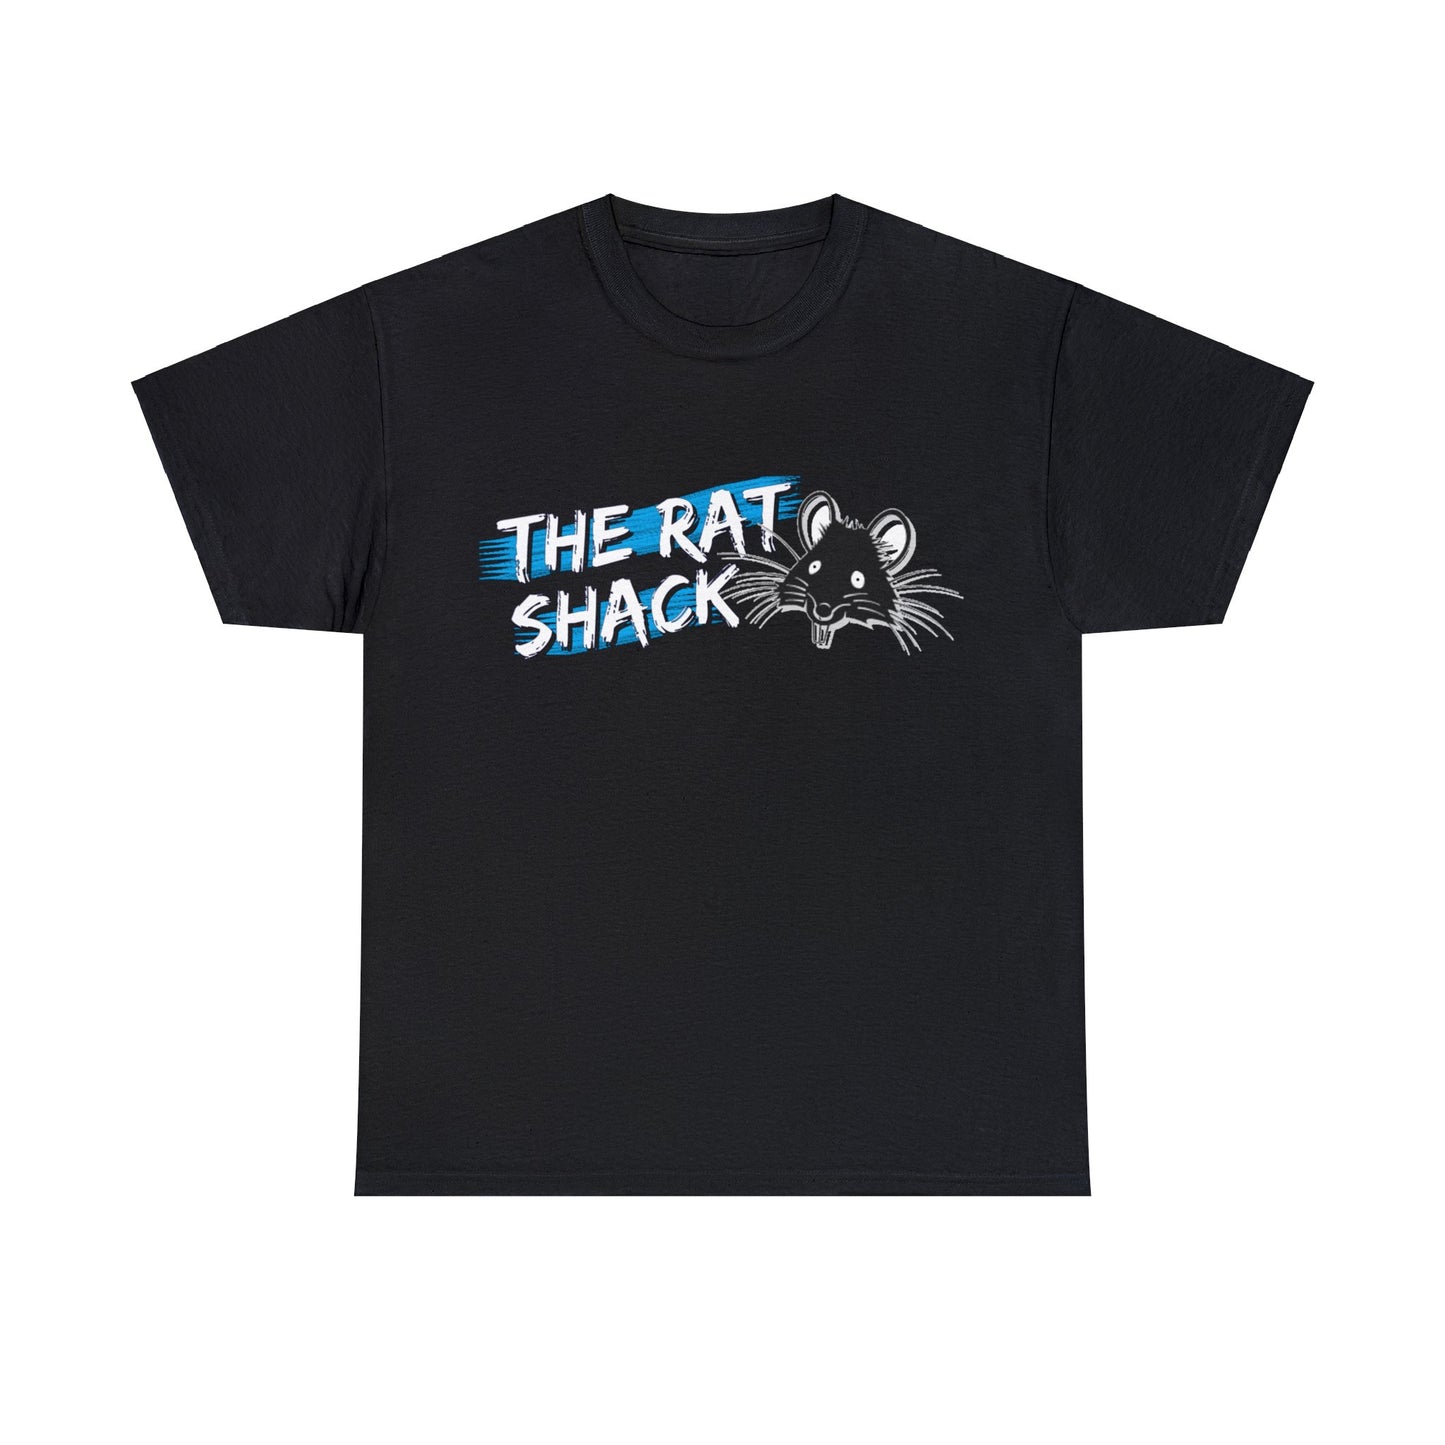 The Rat Shack Printed Tee